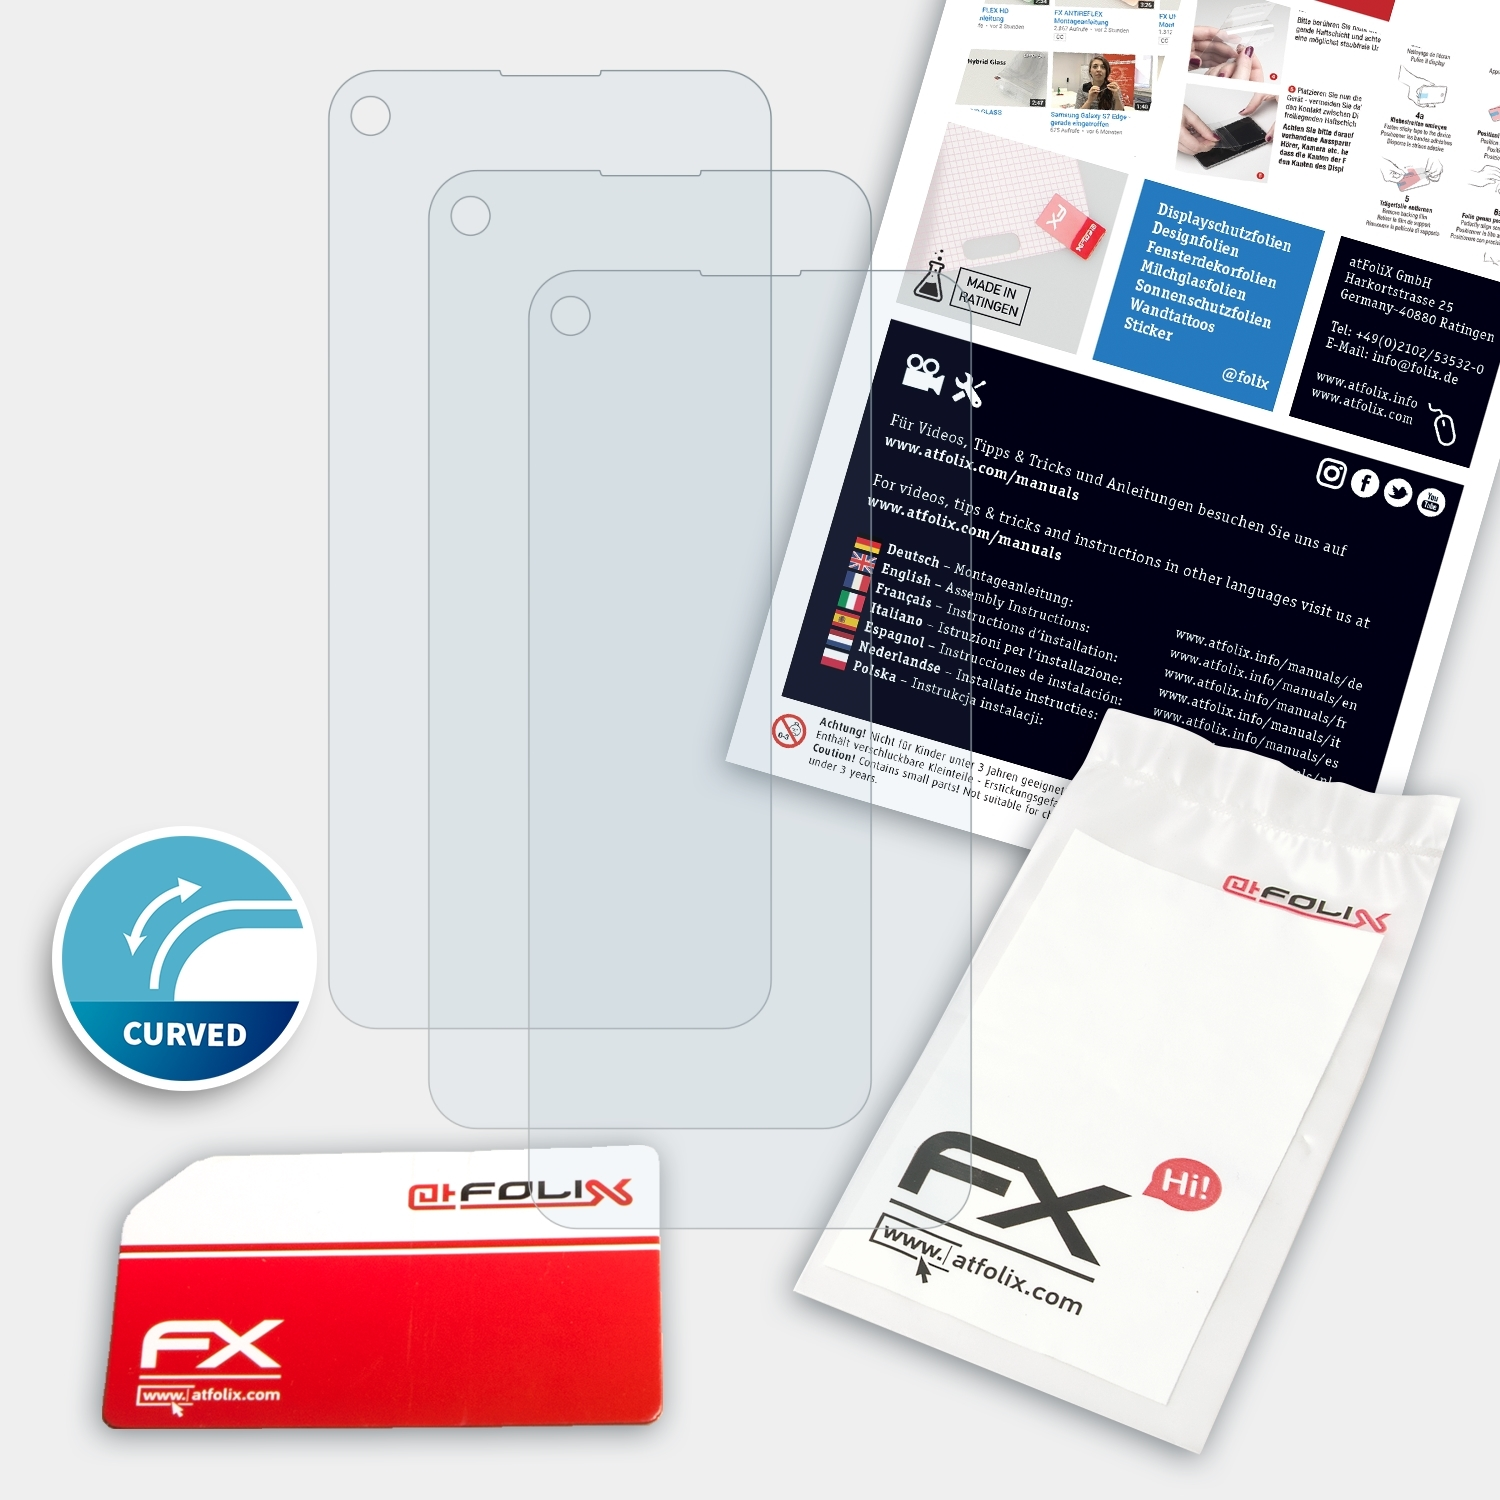 3x ATFOLIX S) FX-ActiFleX Displayschutz(für Coolpad Cool